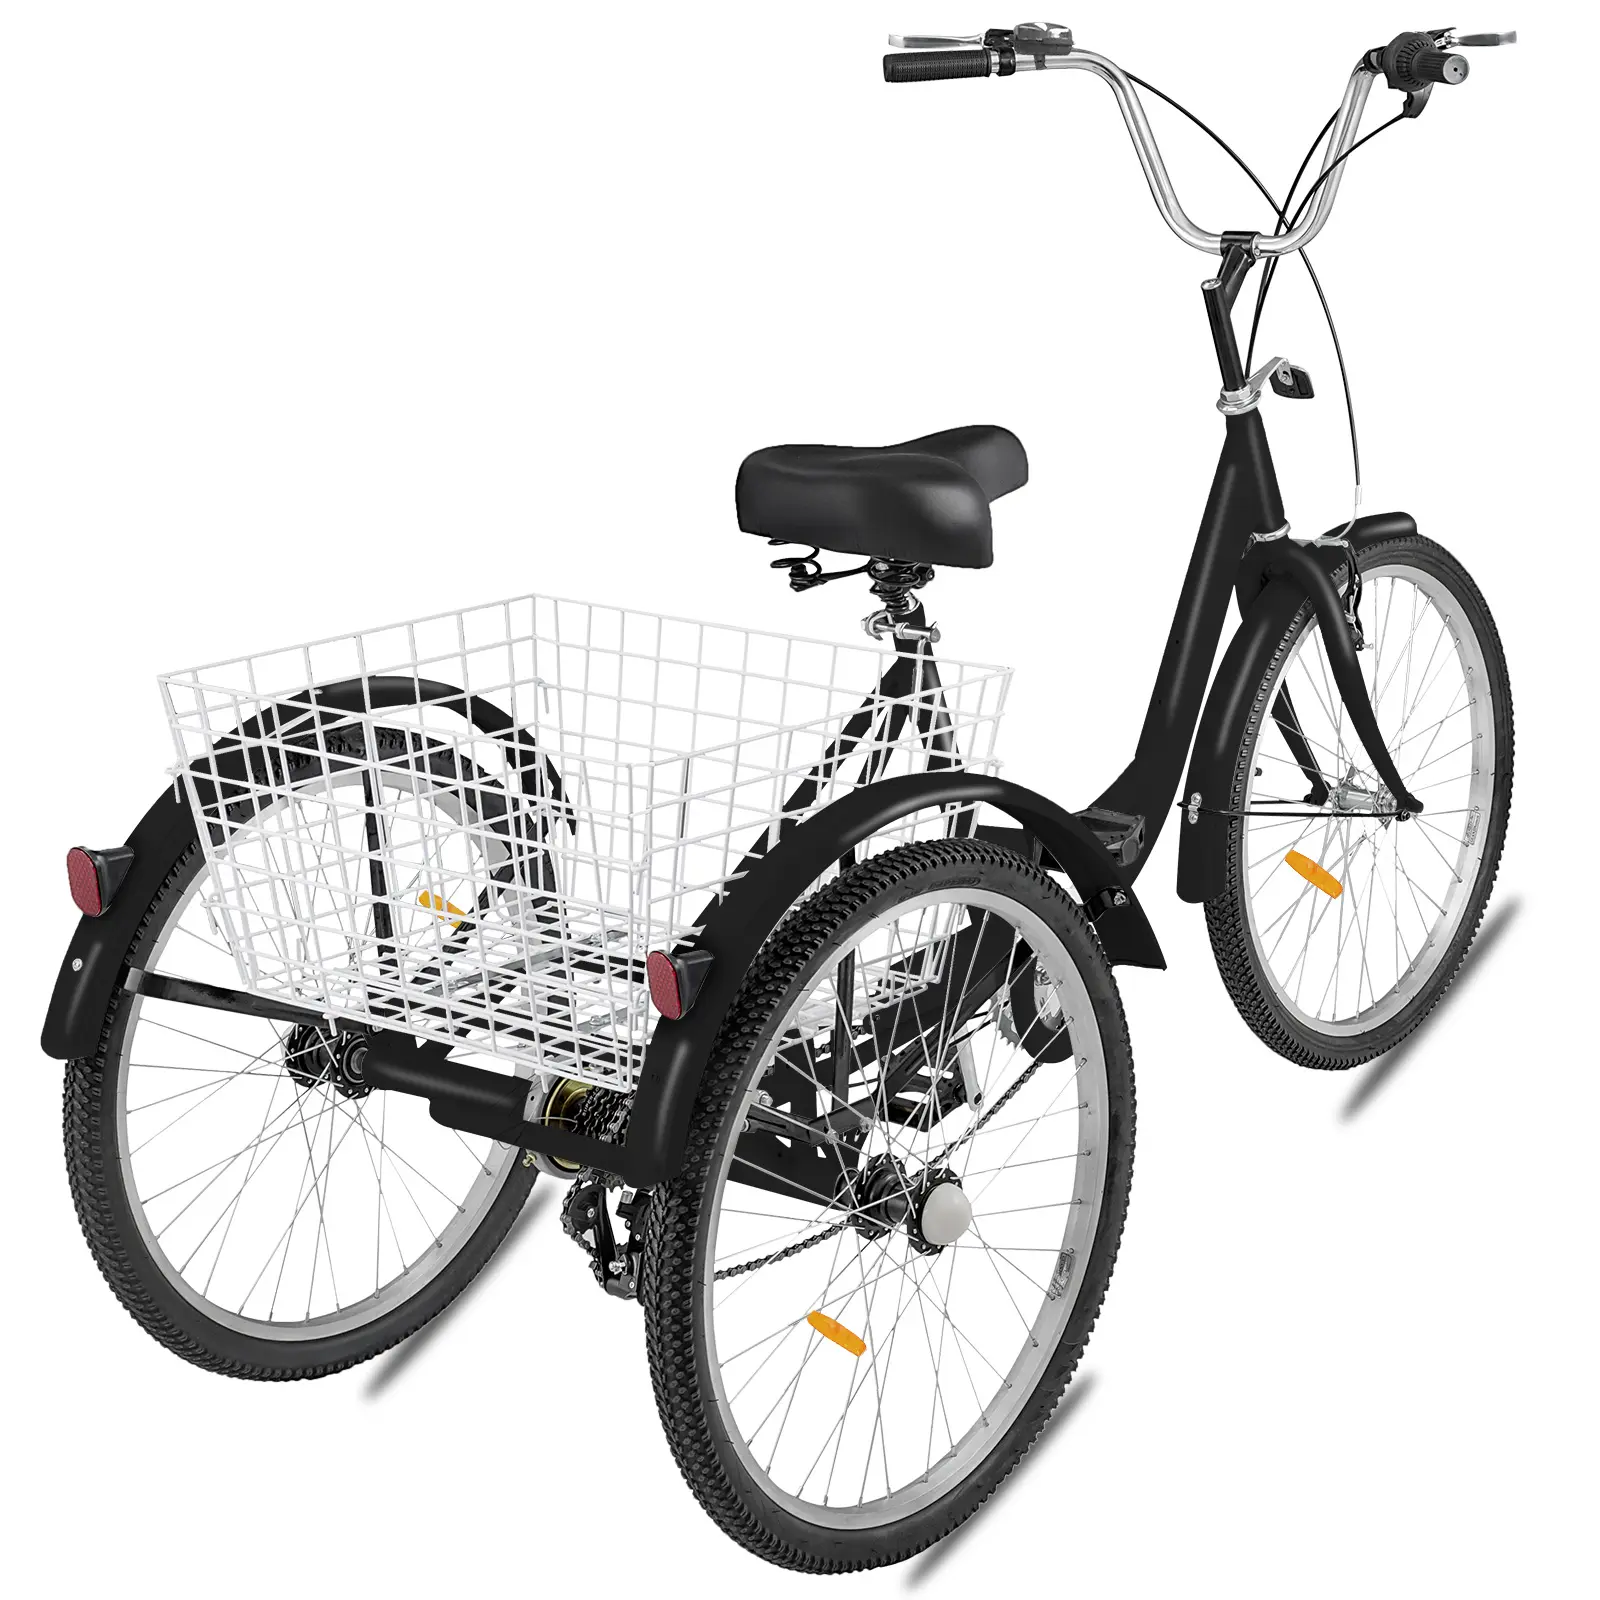 Bicicleta eléctrica de 3 ruedas para adulto, con cesta, China, 2020